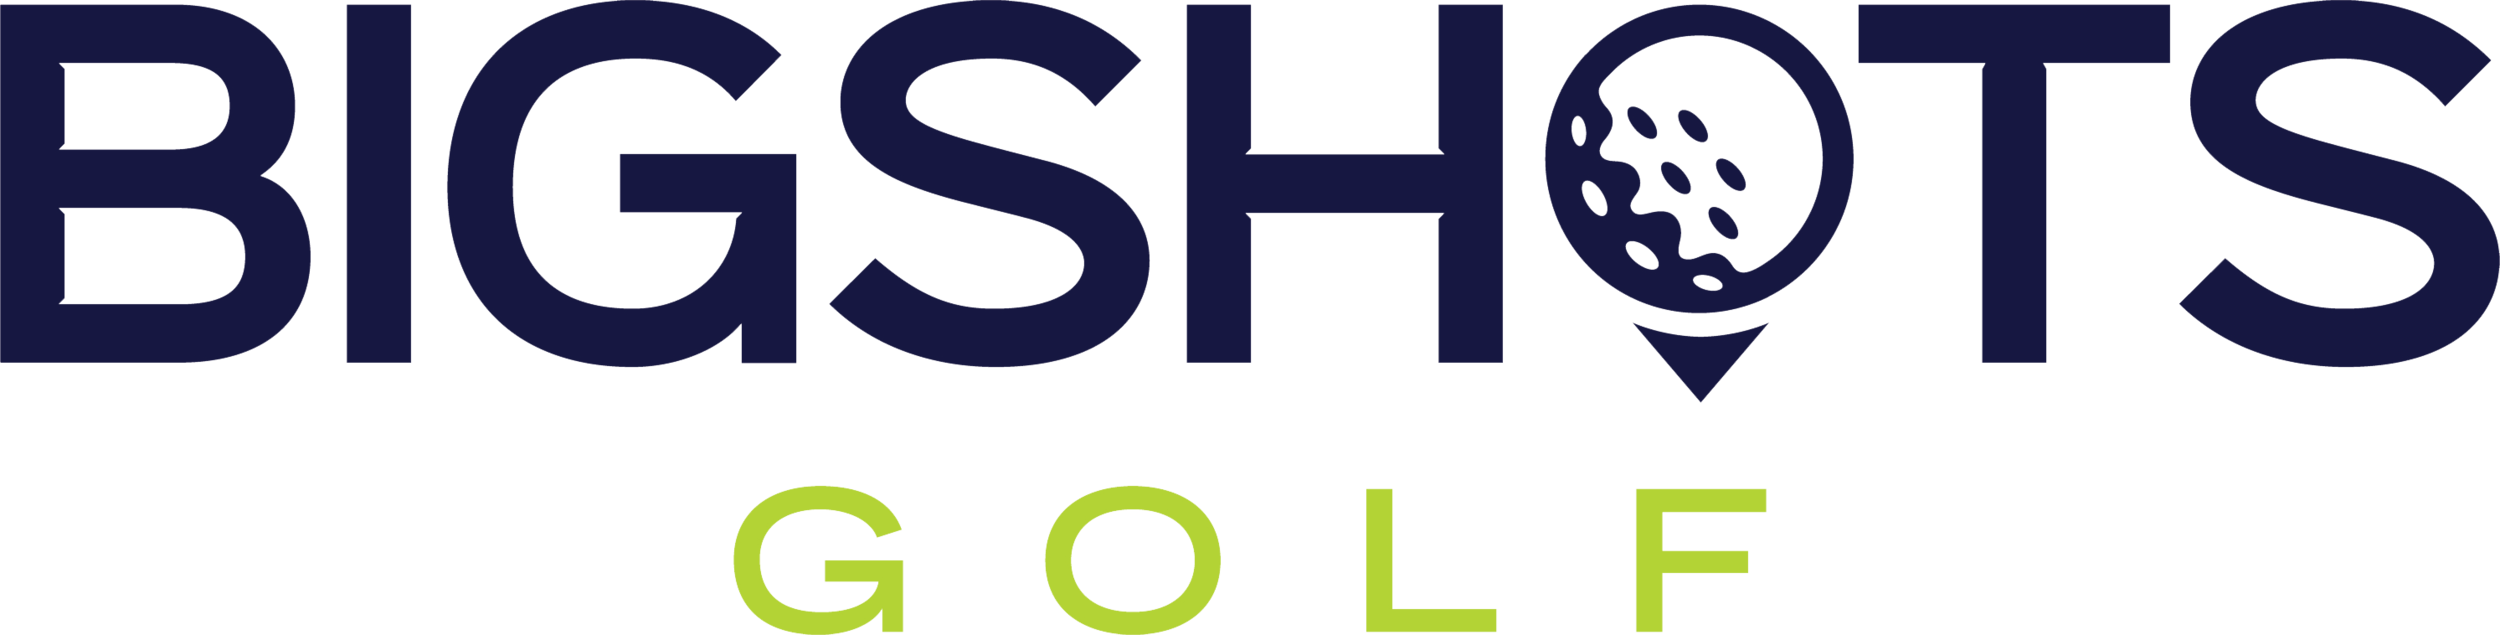 BigShots-Golf-Logo-4C.png